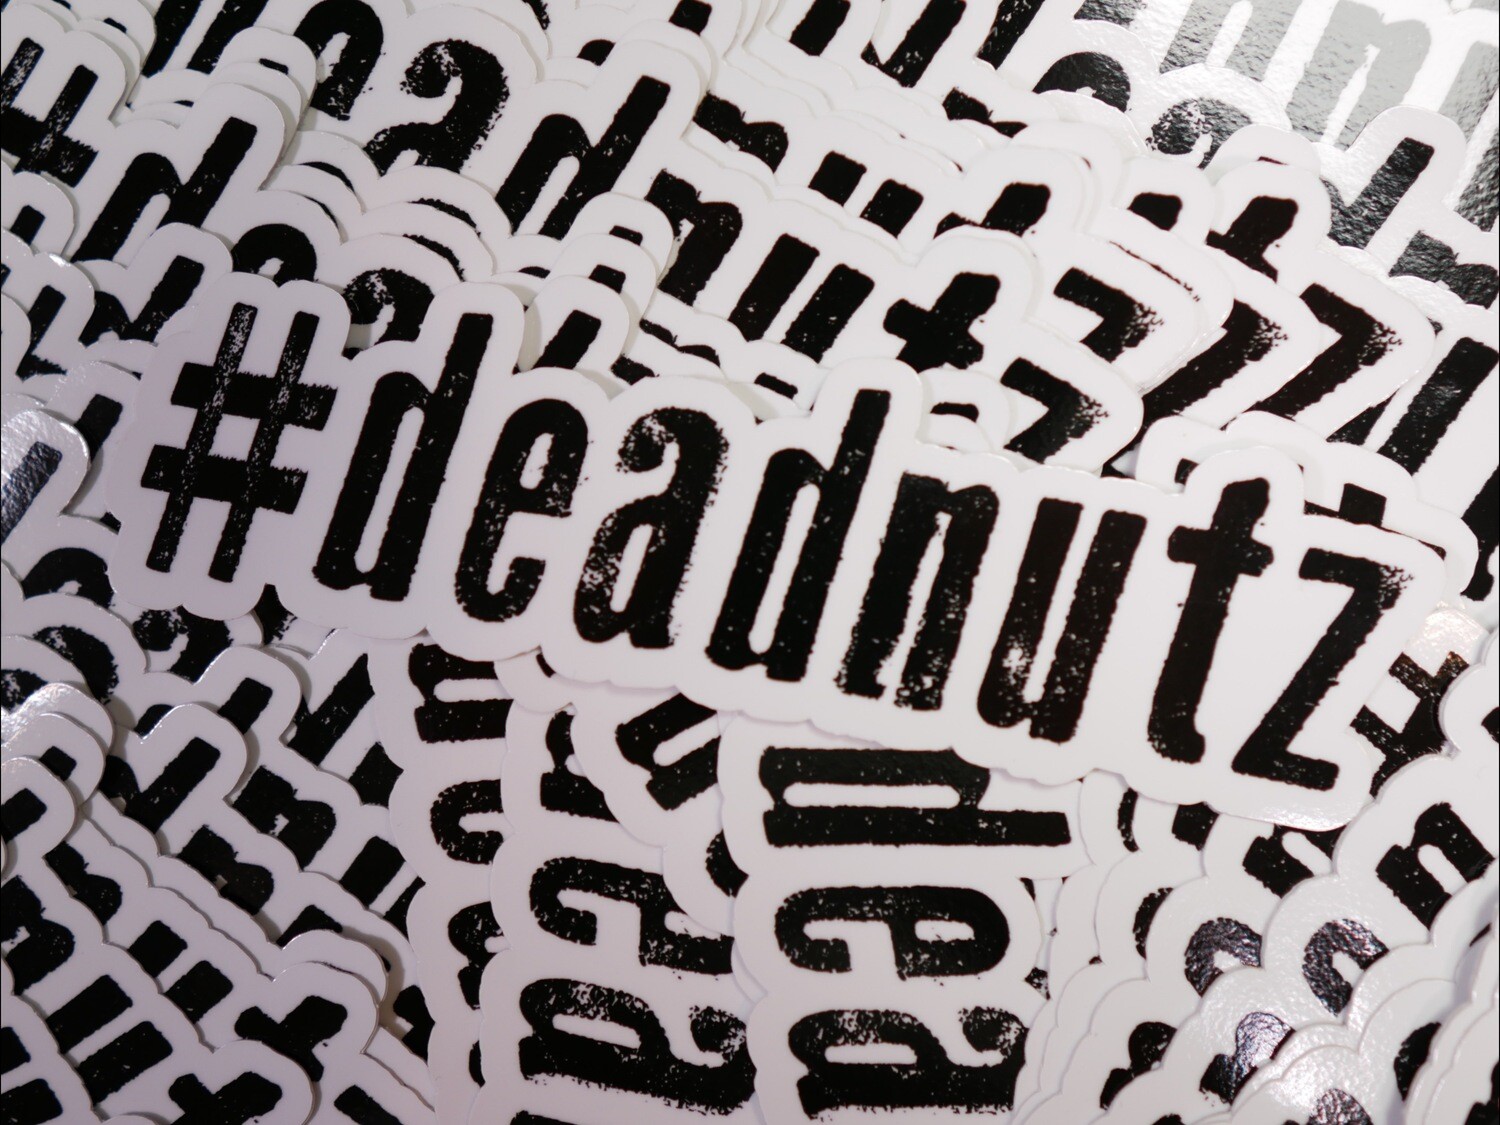 #deadnutz Decal